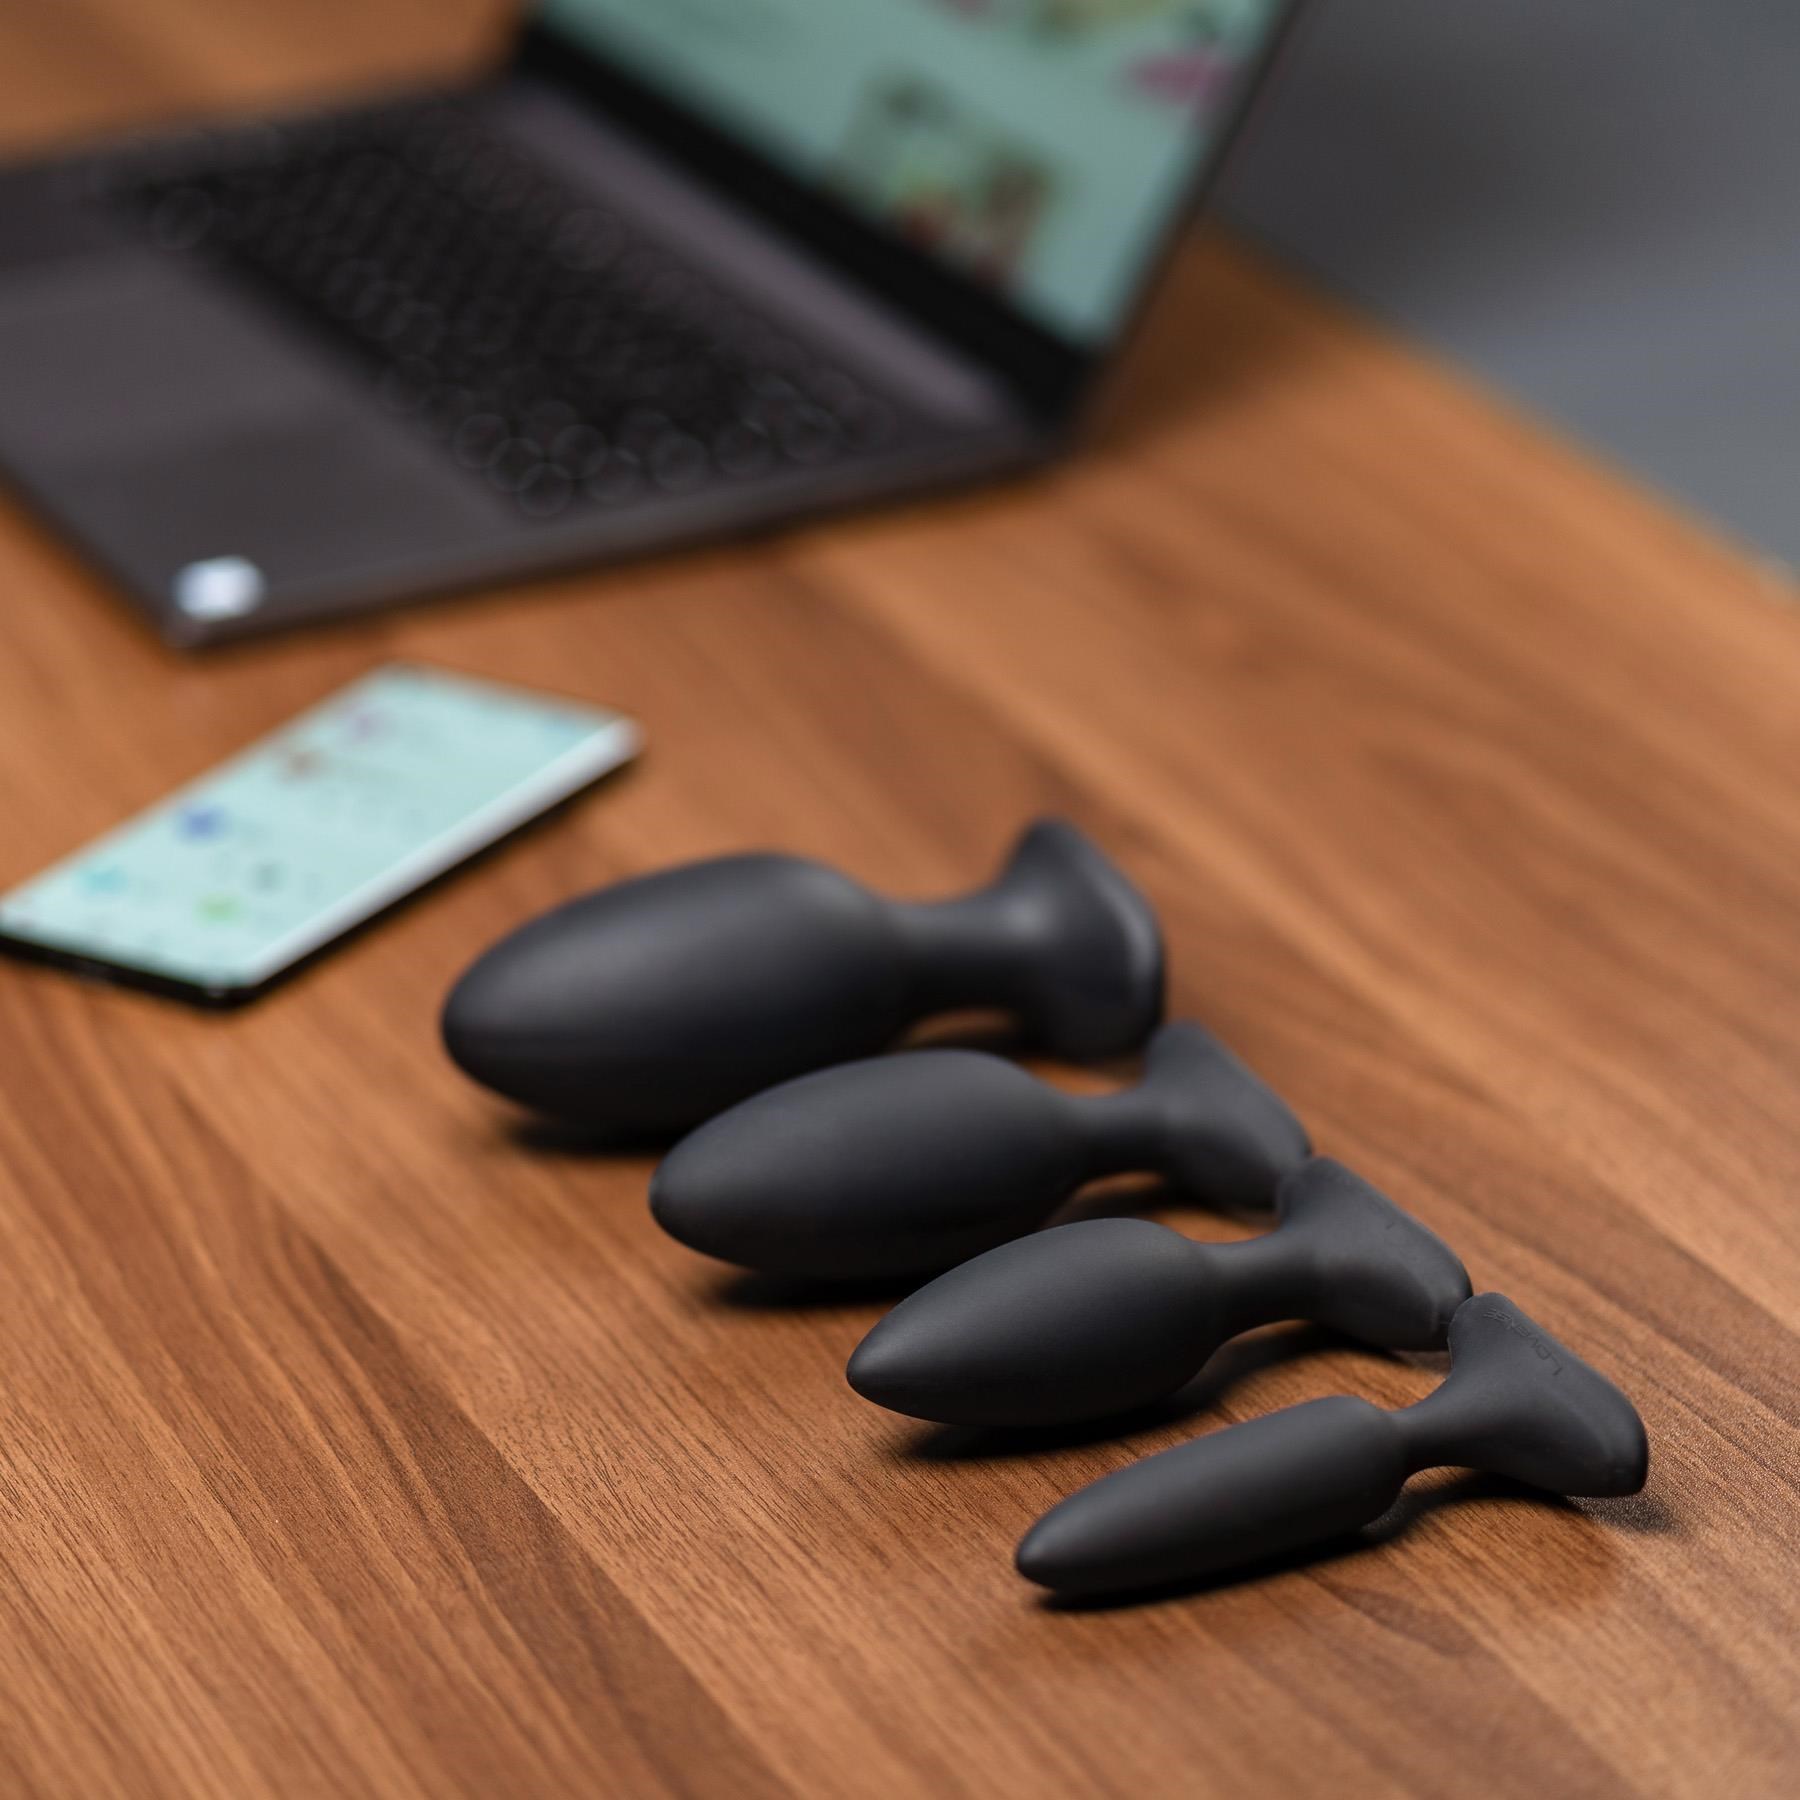 Lovense Hush 2 Bluetooth Vibrating Butt Plug - All Sizes on Desk